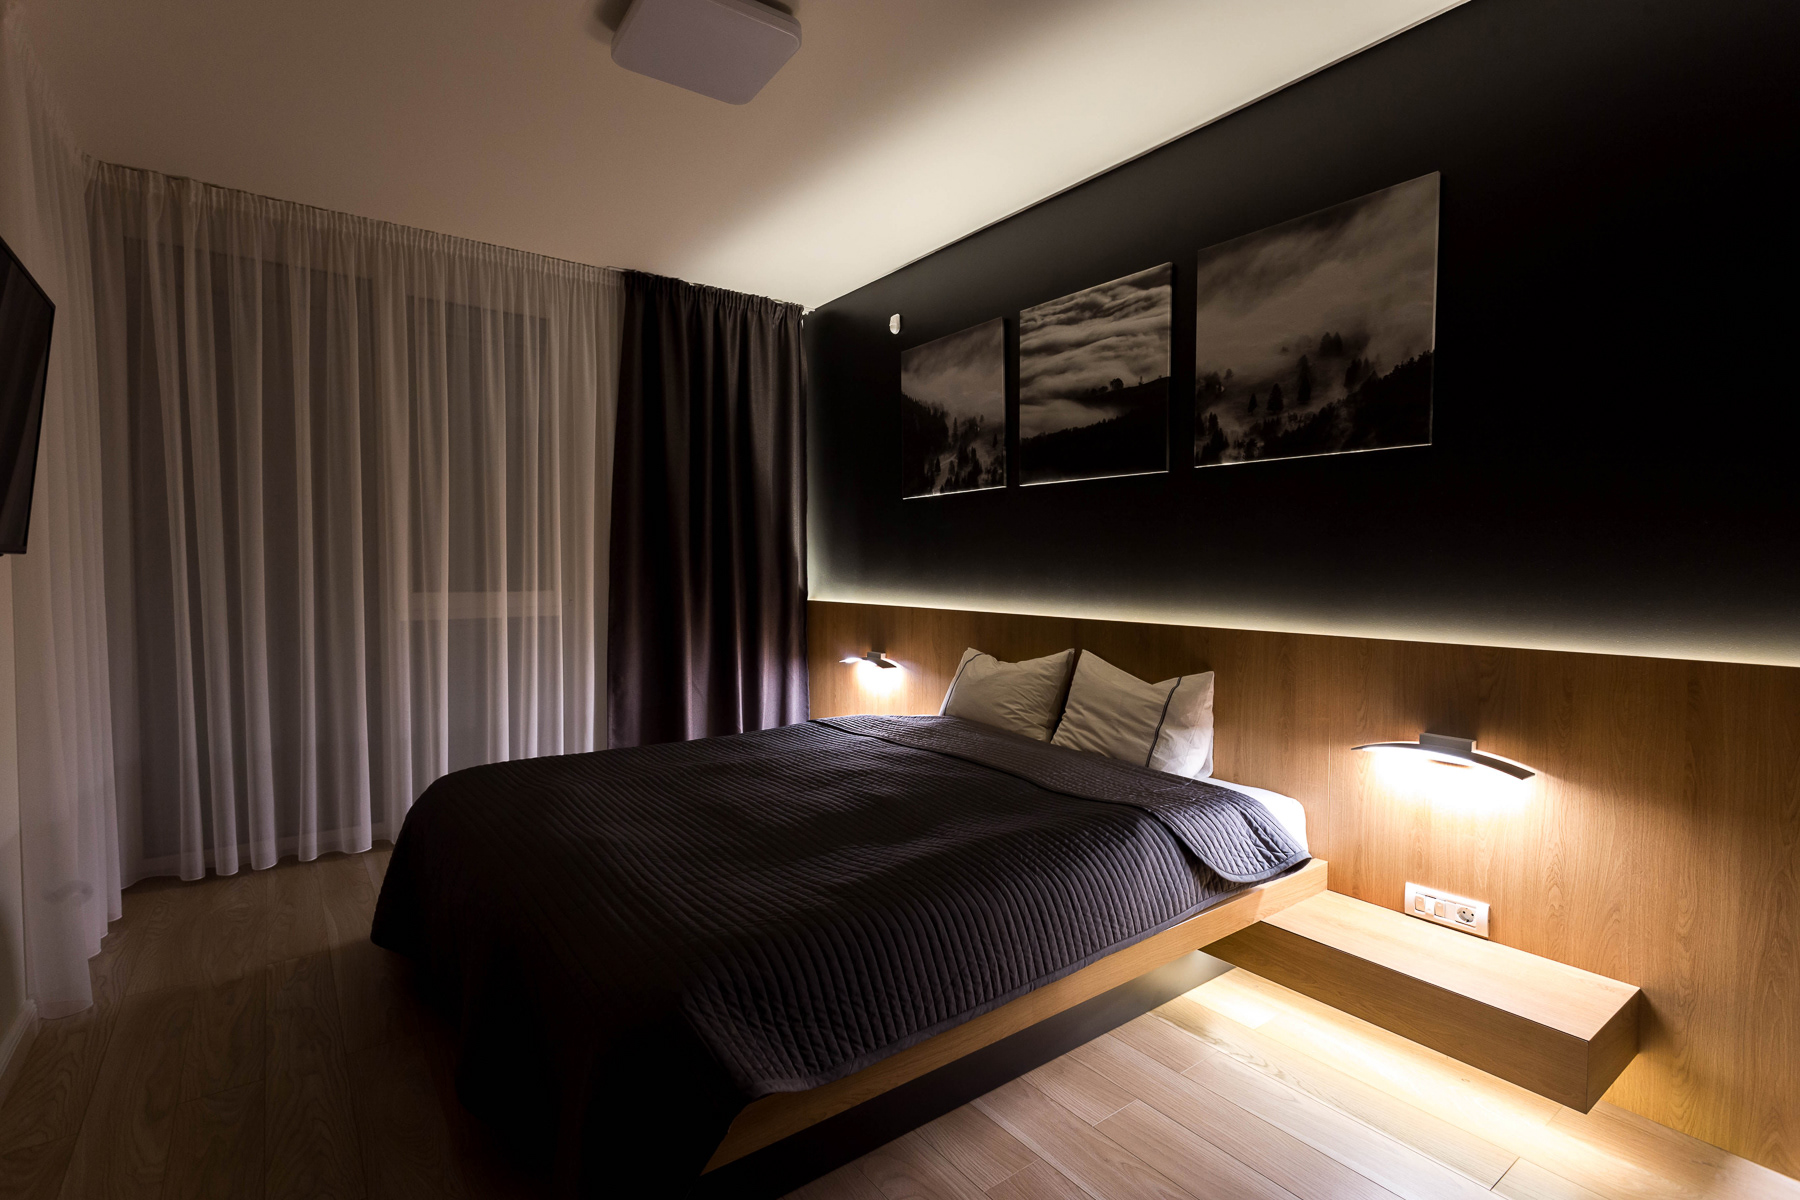 Dark and Cozy One Bedroom Apartment by Davidsign - InteriorZine